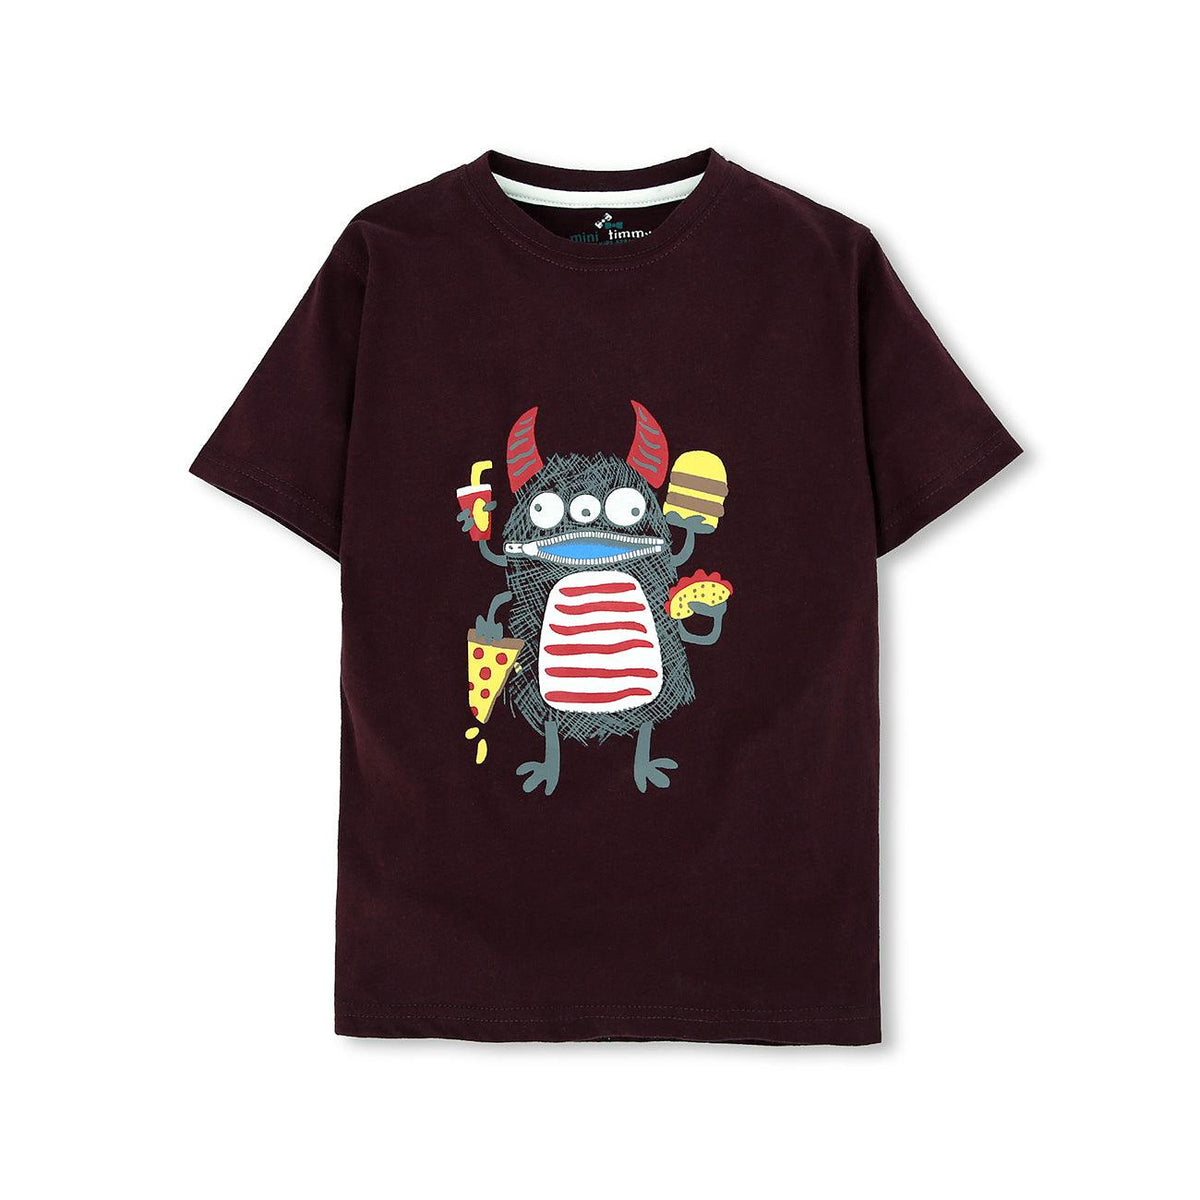 Boys Soft Cotton Printed T-Shirt 9 MONTH - 10 YRS (MI-11123) - Brands River